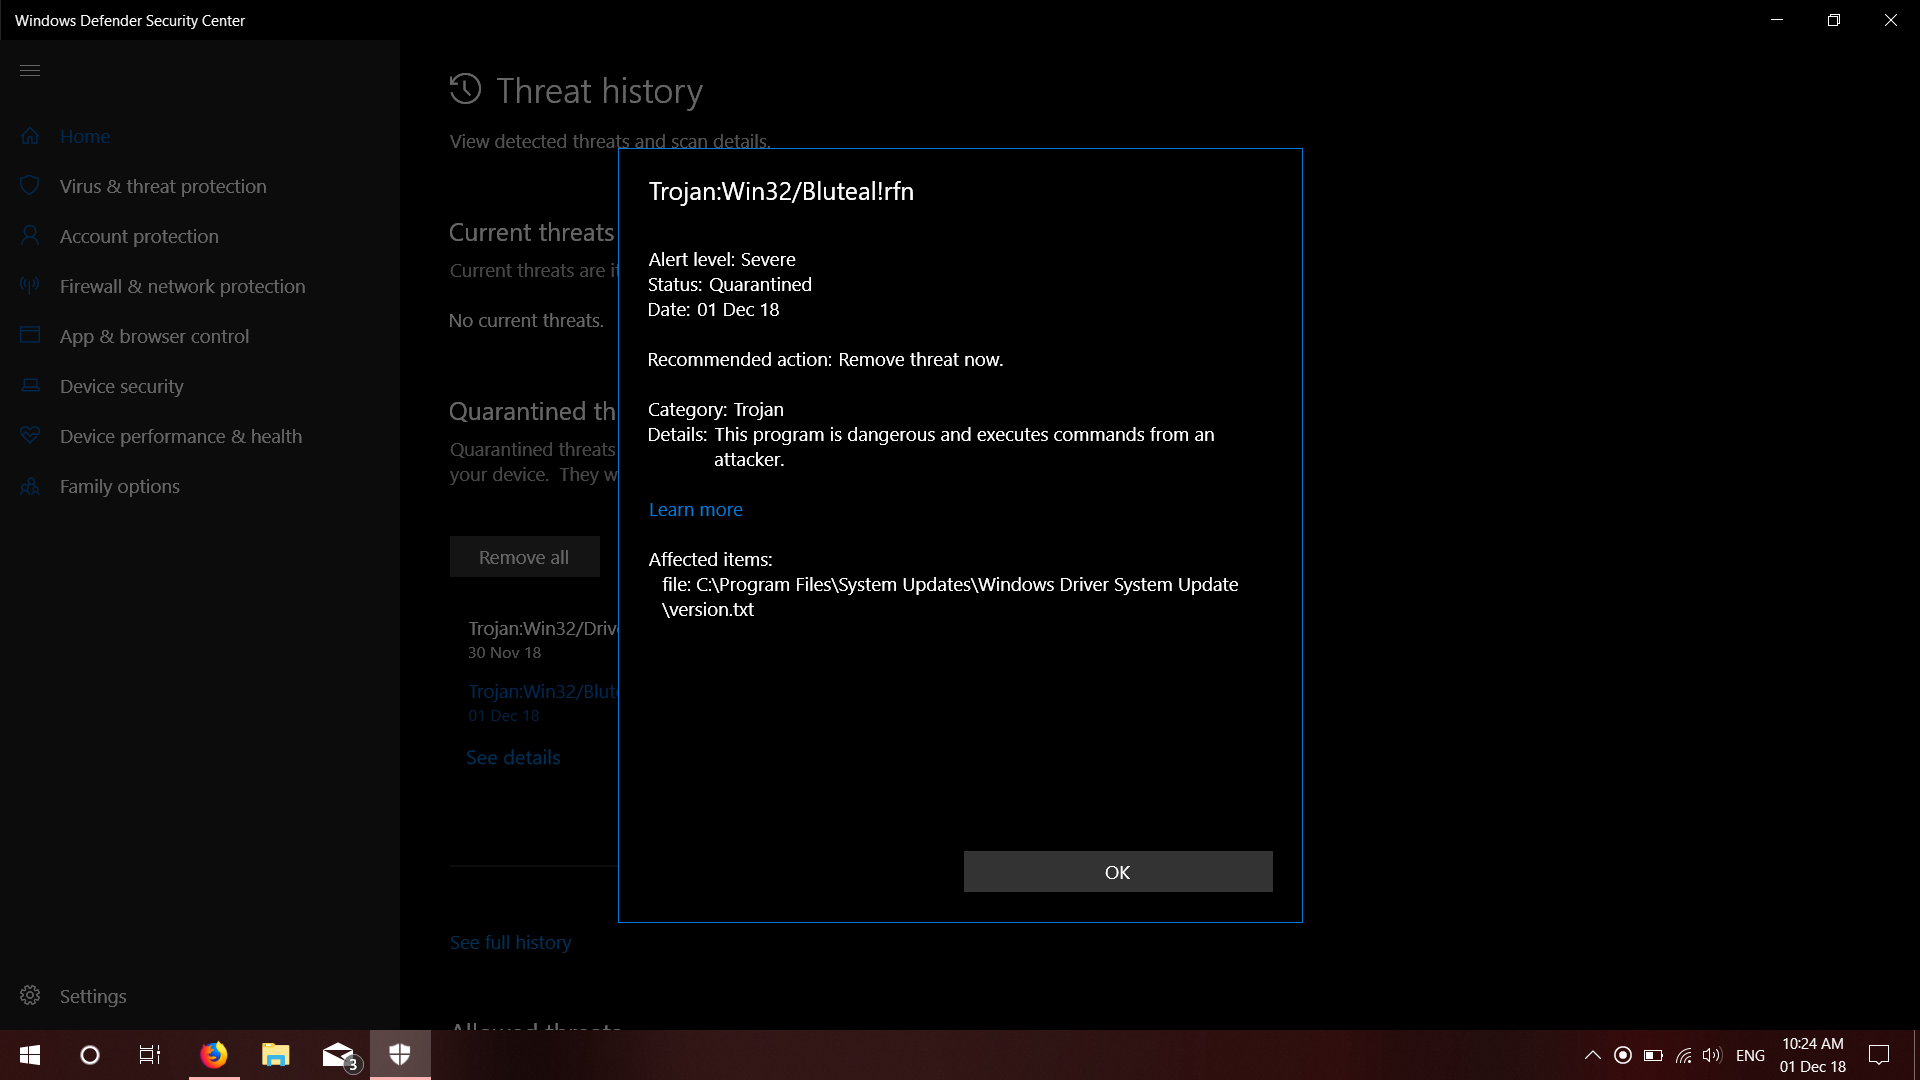 Windows Defender showing Trojans in Windows Driver System Update folder 2a538cd3-37d0-4506-80c1-e96e2f6428f3?upload=true.png